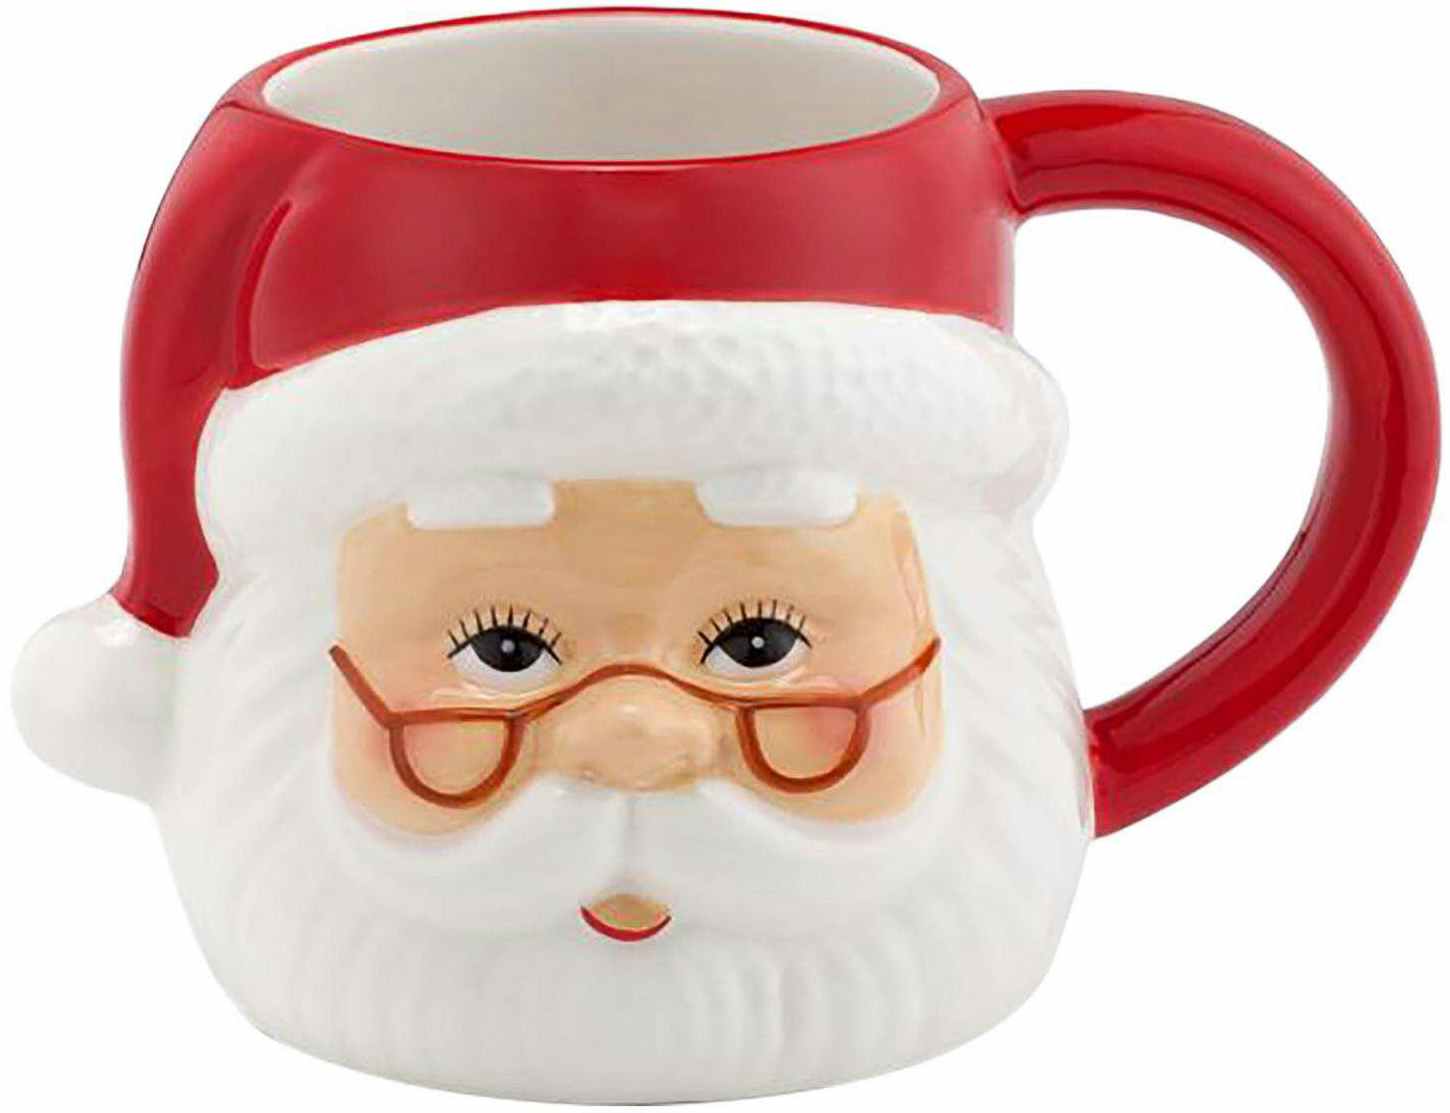 vintage santa mugs - A Mr. Christmas Red and White Santa Mug on a white background